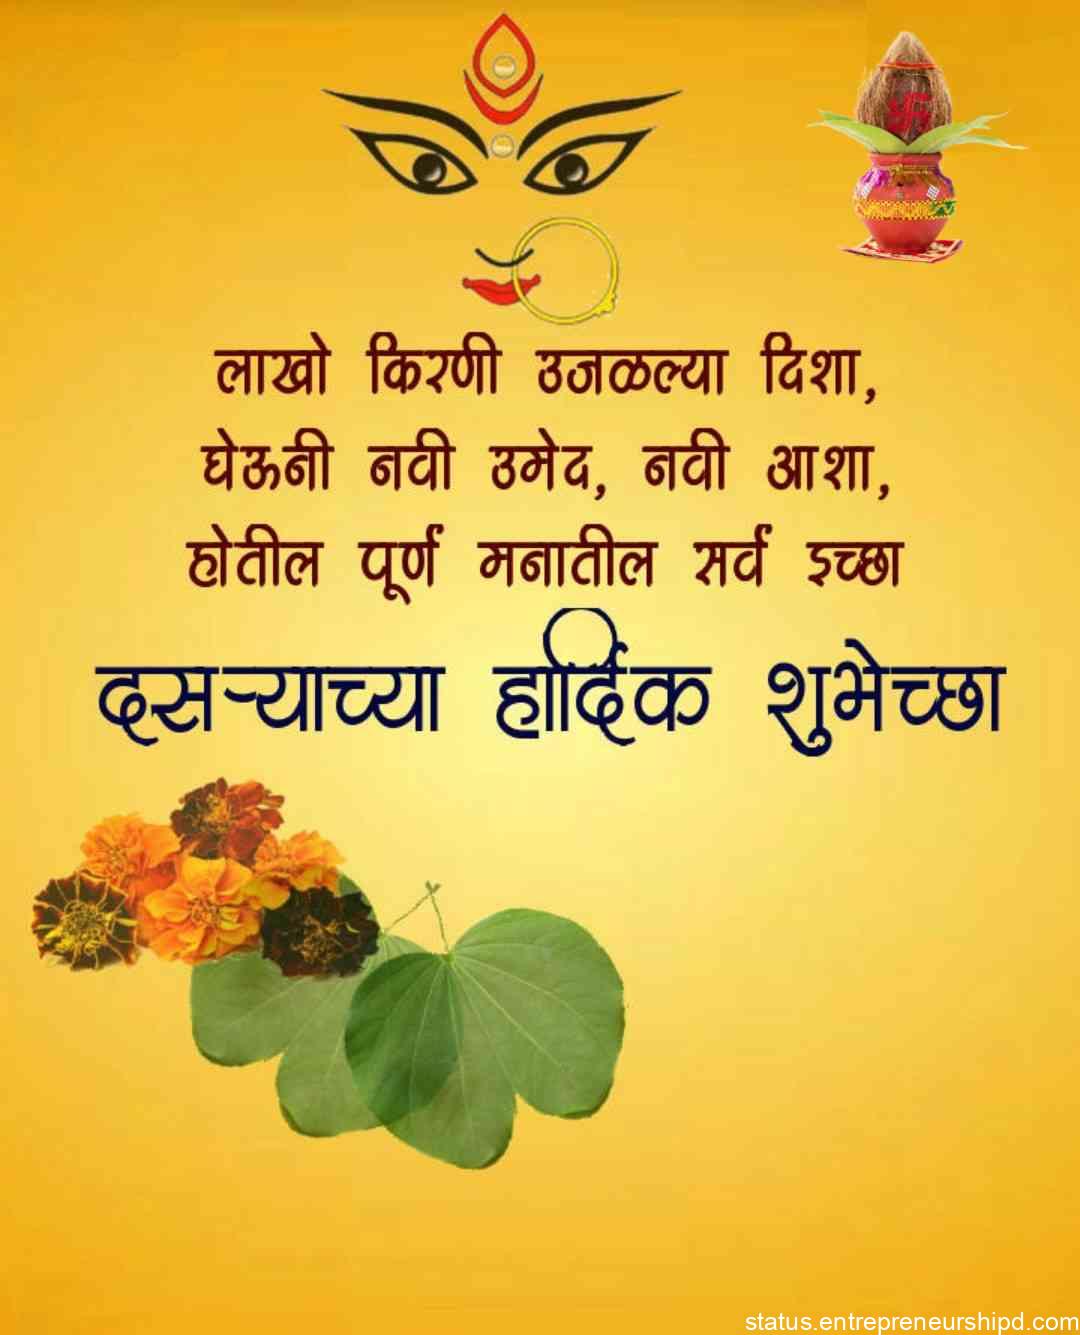 Dasara wishes marathi quotes